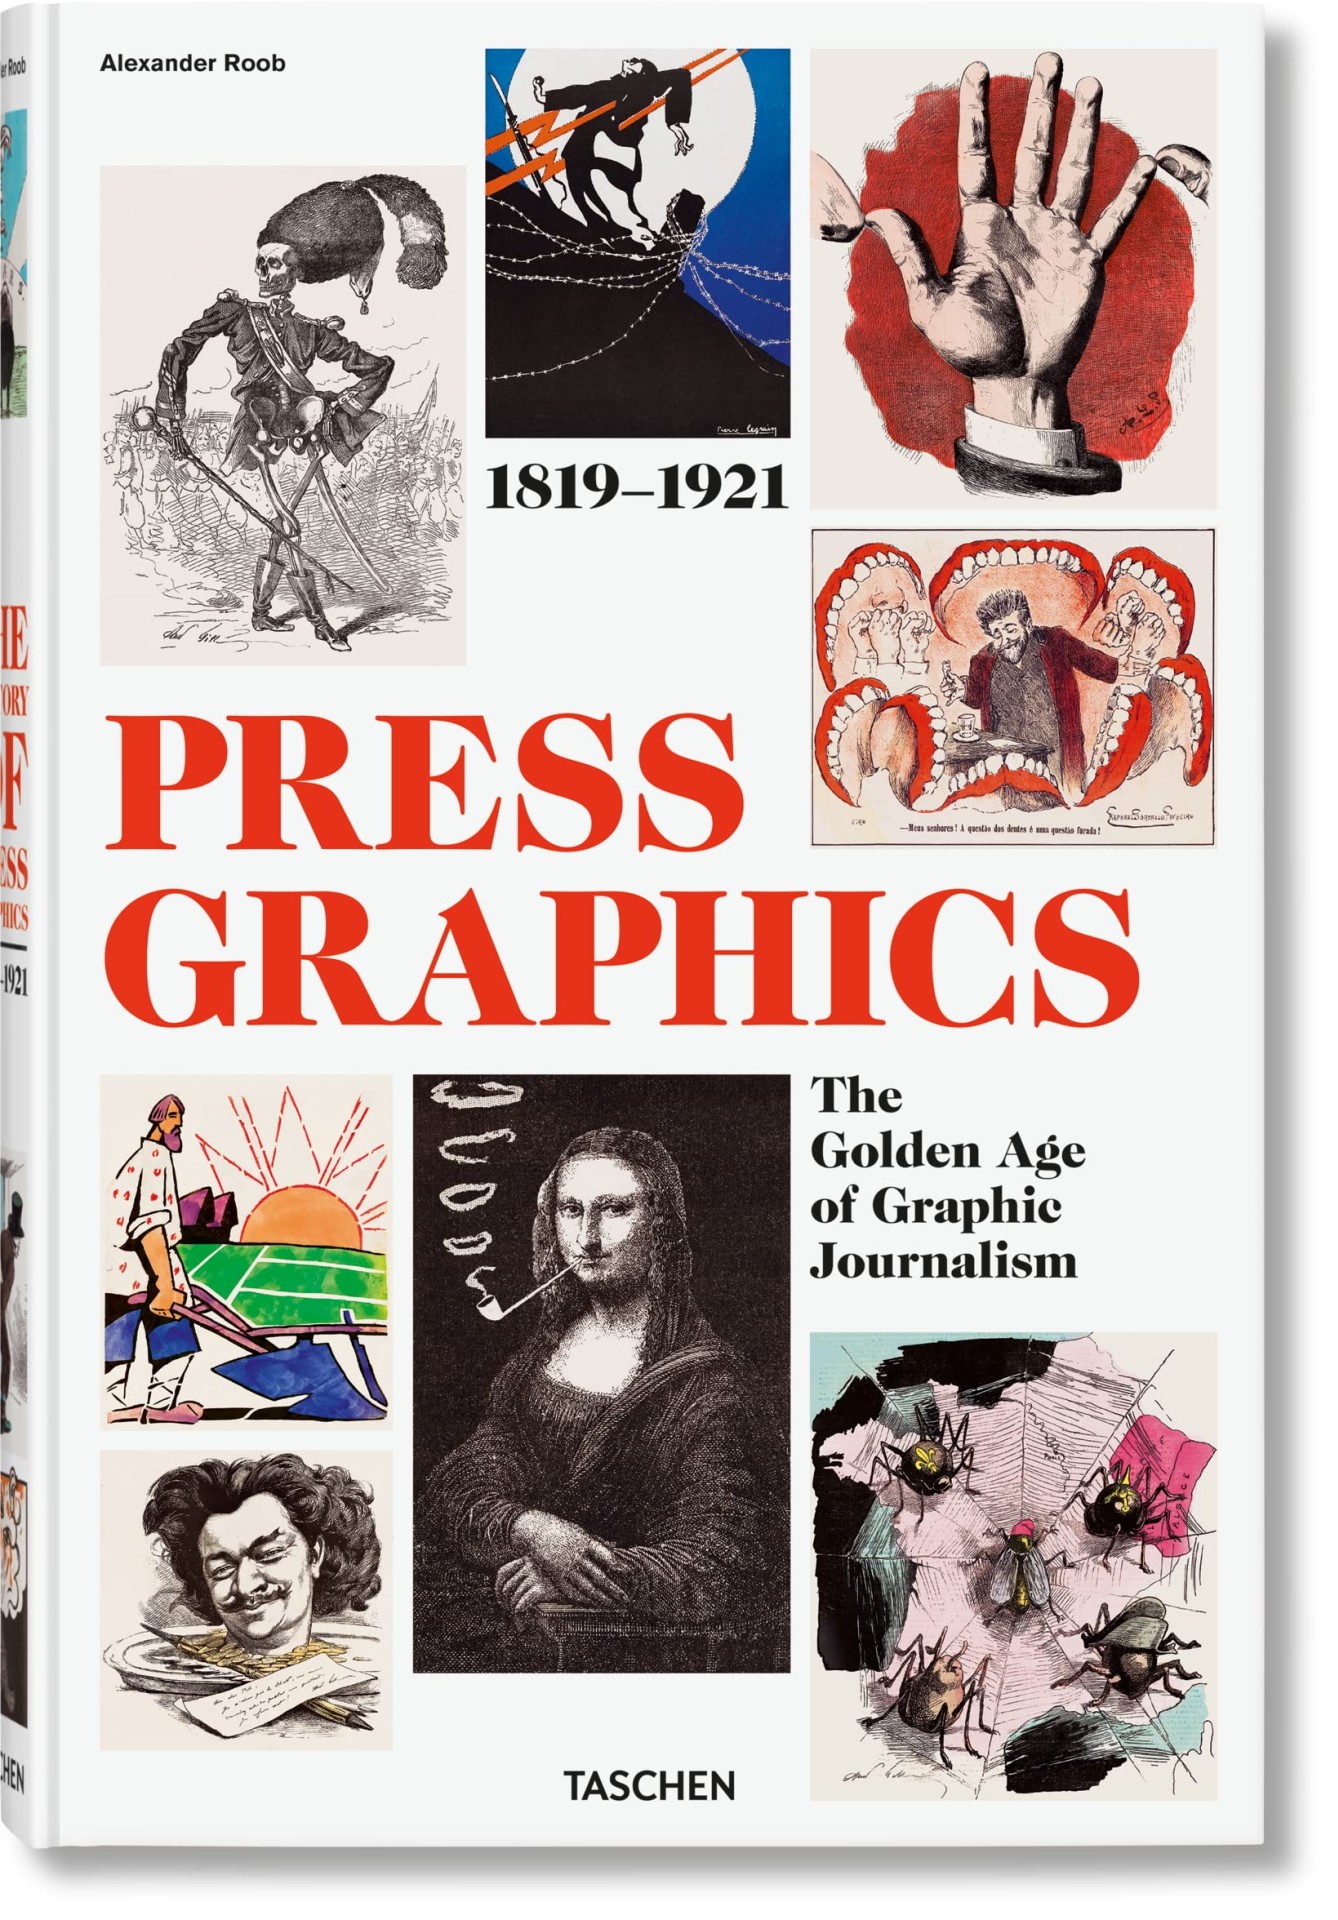 Imágenes numeradas - Página 18 17314-history-of-press-graphics-1819-1921-91vp9wuq39l